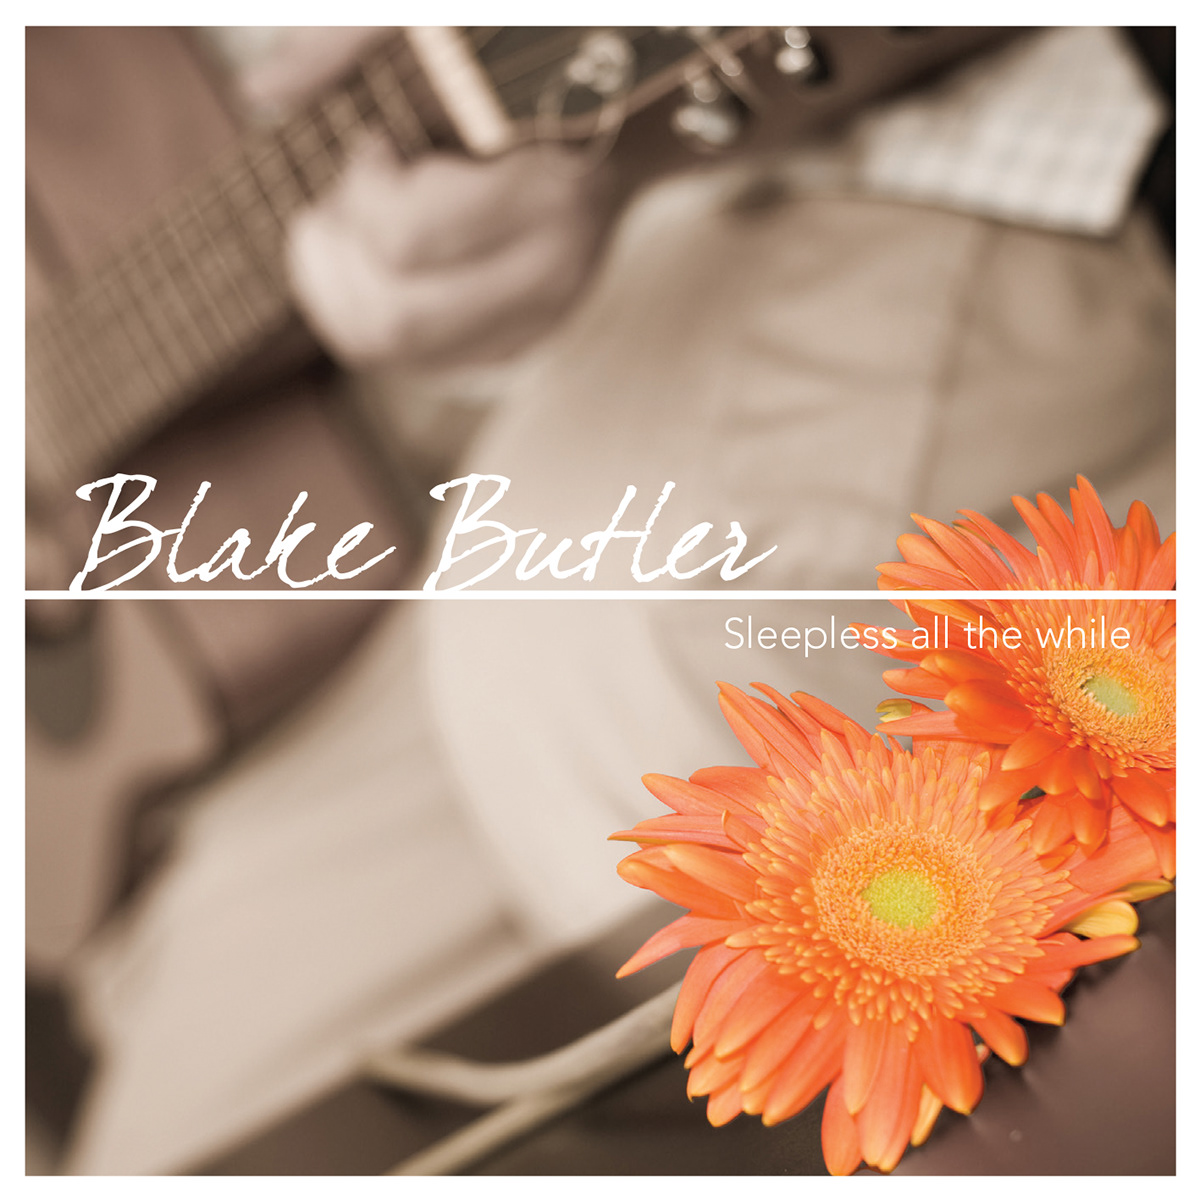 blake butler cd compact disc Album cover art graphic design Flowers guitar